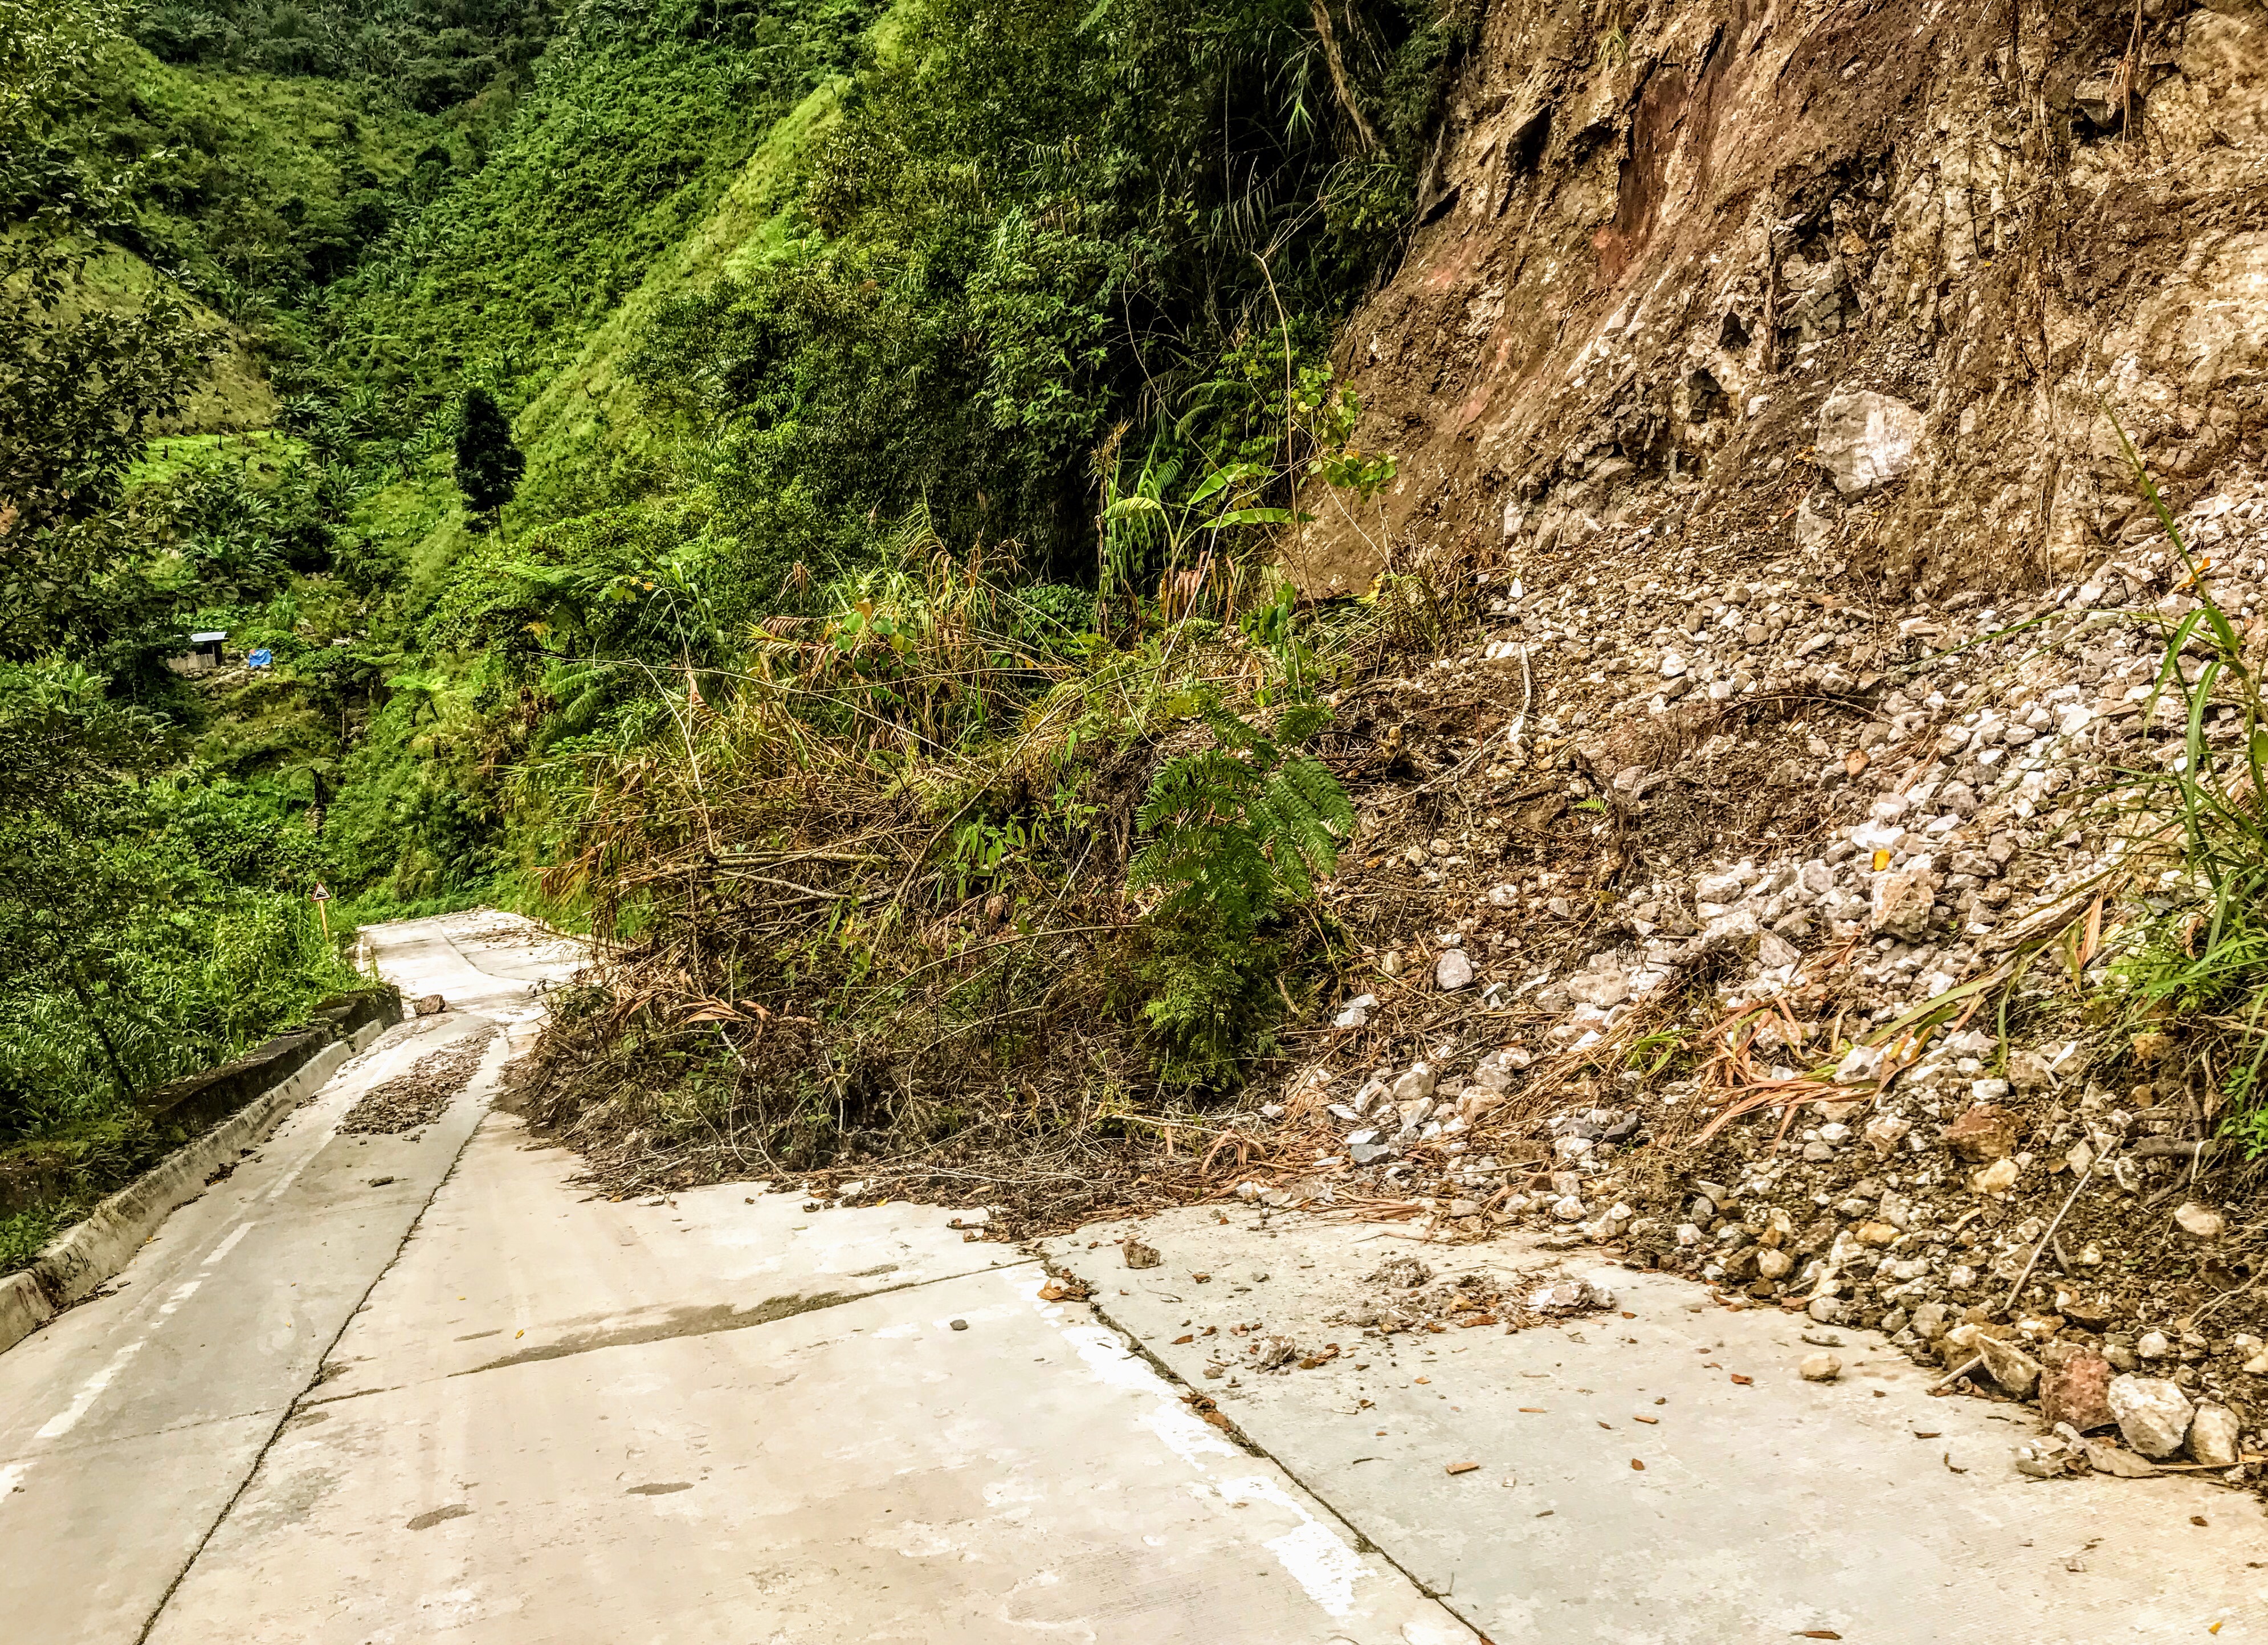 Landslide near Banaue, Philippines 